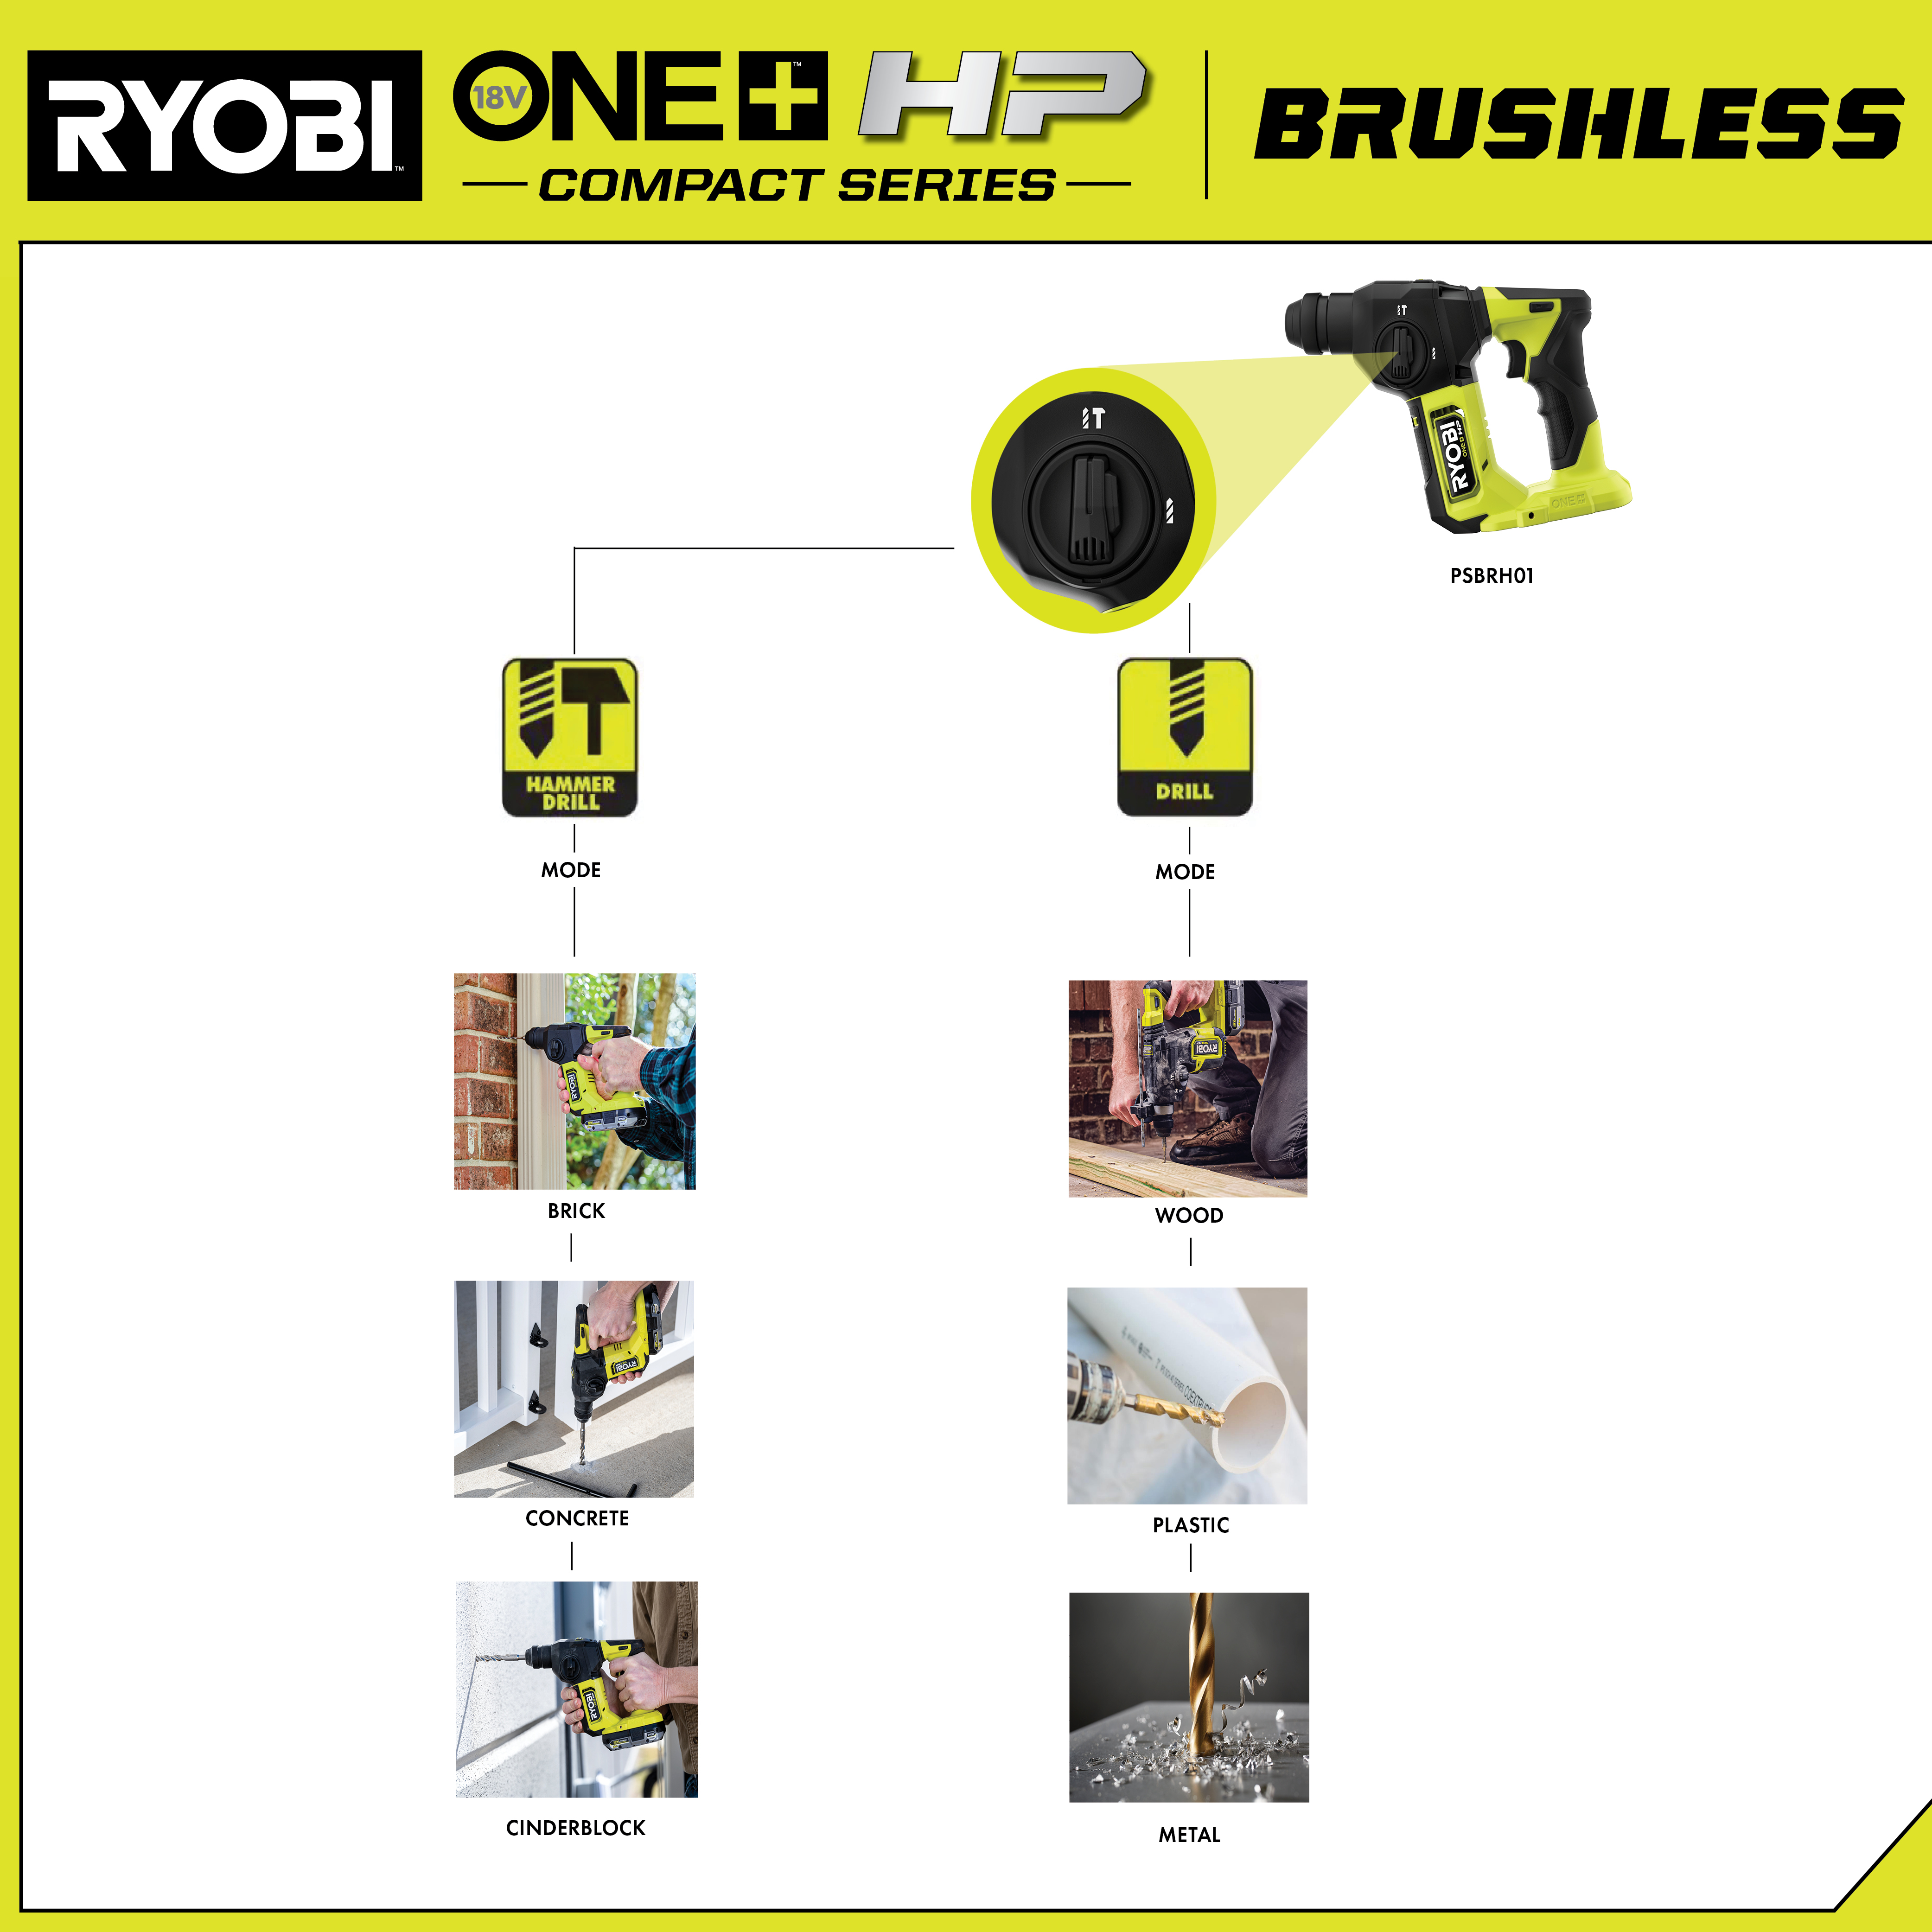 18V ONE+ HP COMPACT BRUSHLESS 5/8 SDS-PLUS - RYOBI Tools